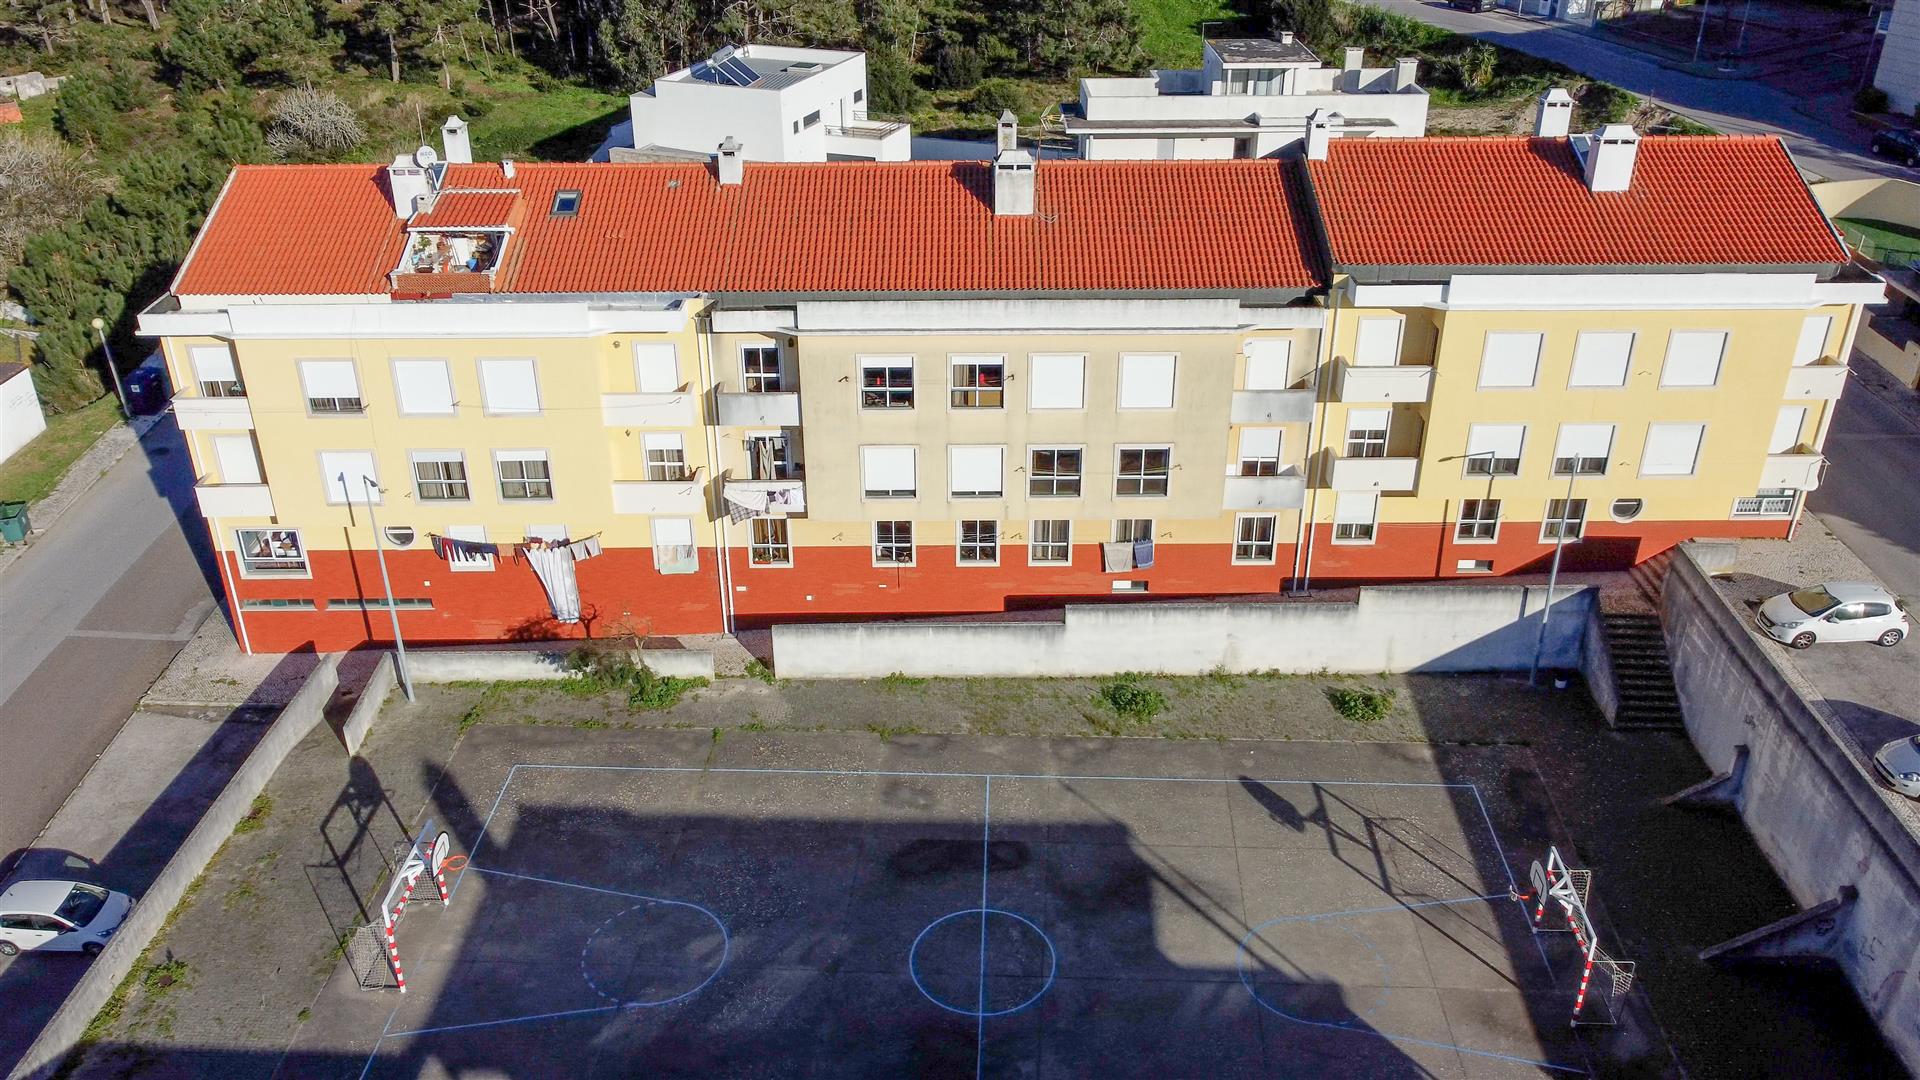 3 bedroom apartment located in Nazaré, 500m from Praia do Norte